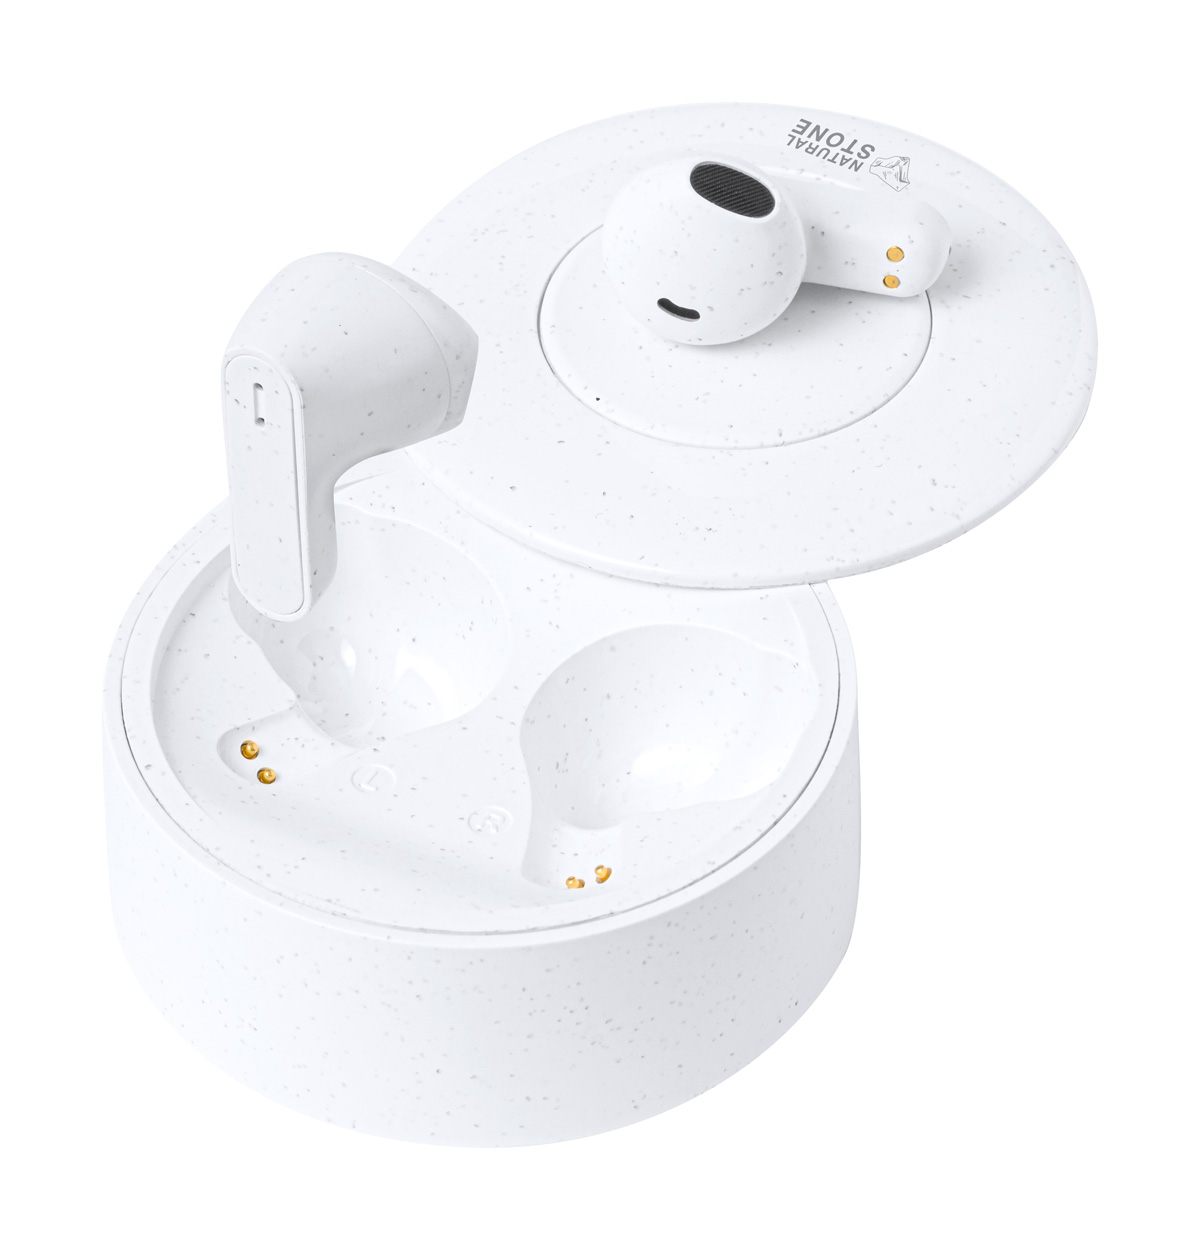 Becker bluetooth headphones - white